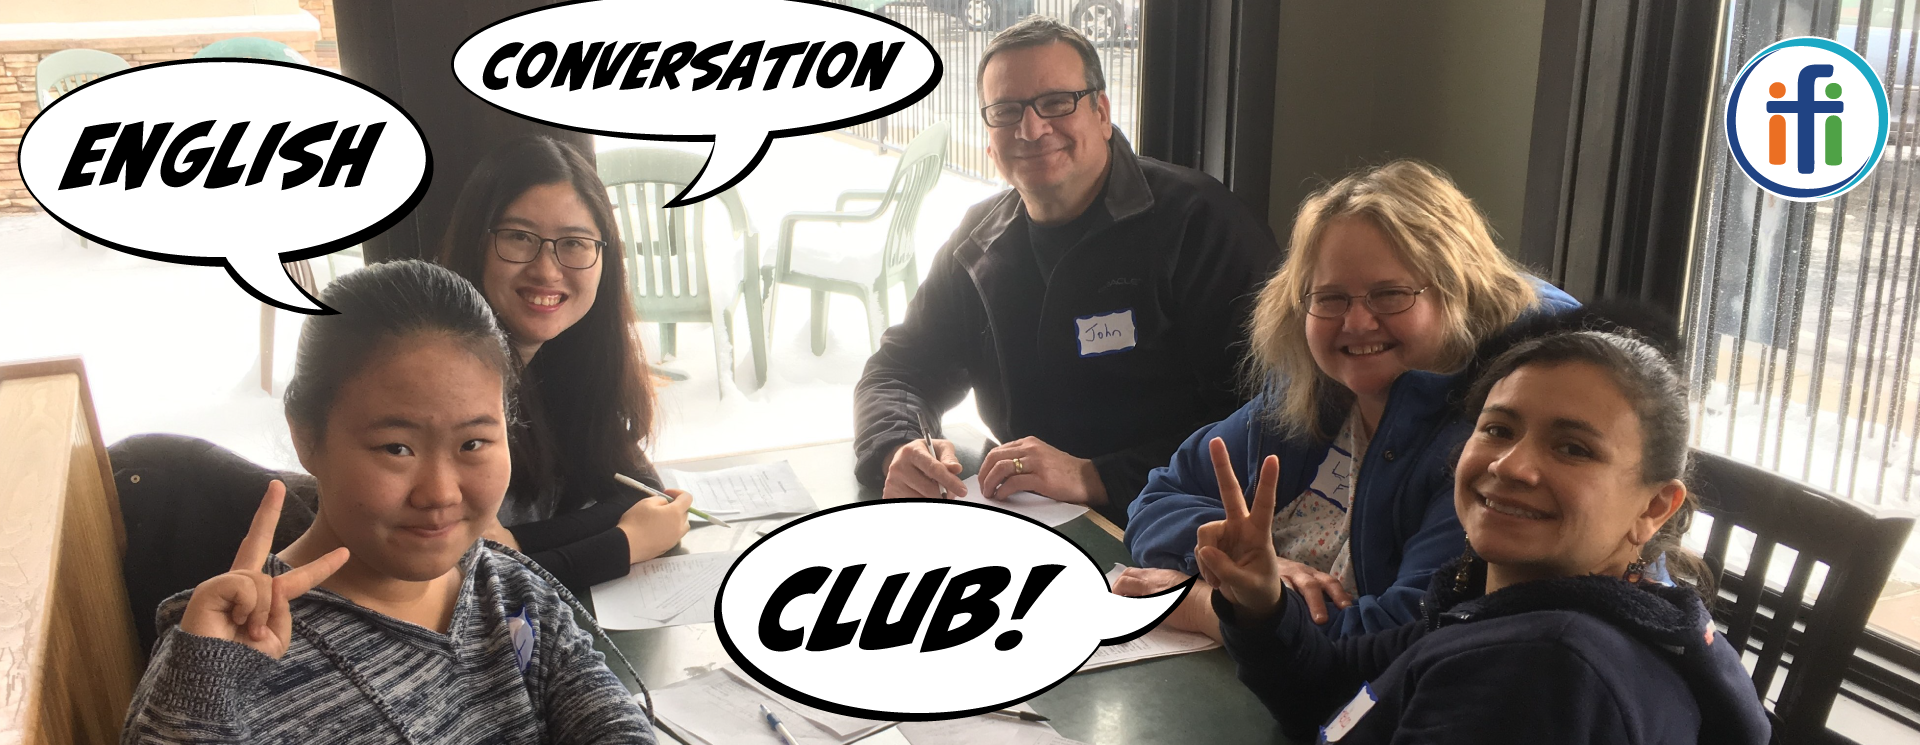 English Conversation Club IFI At Ohio State